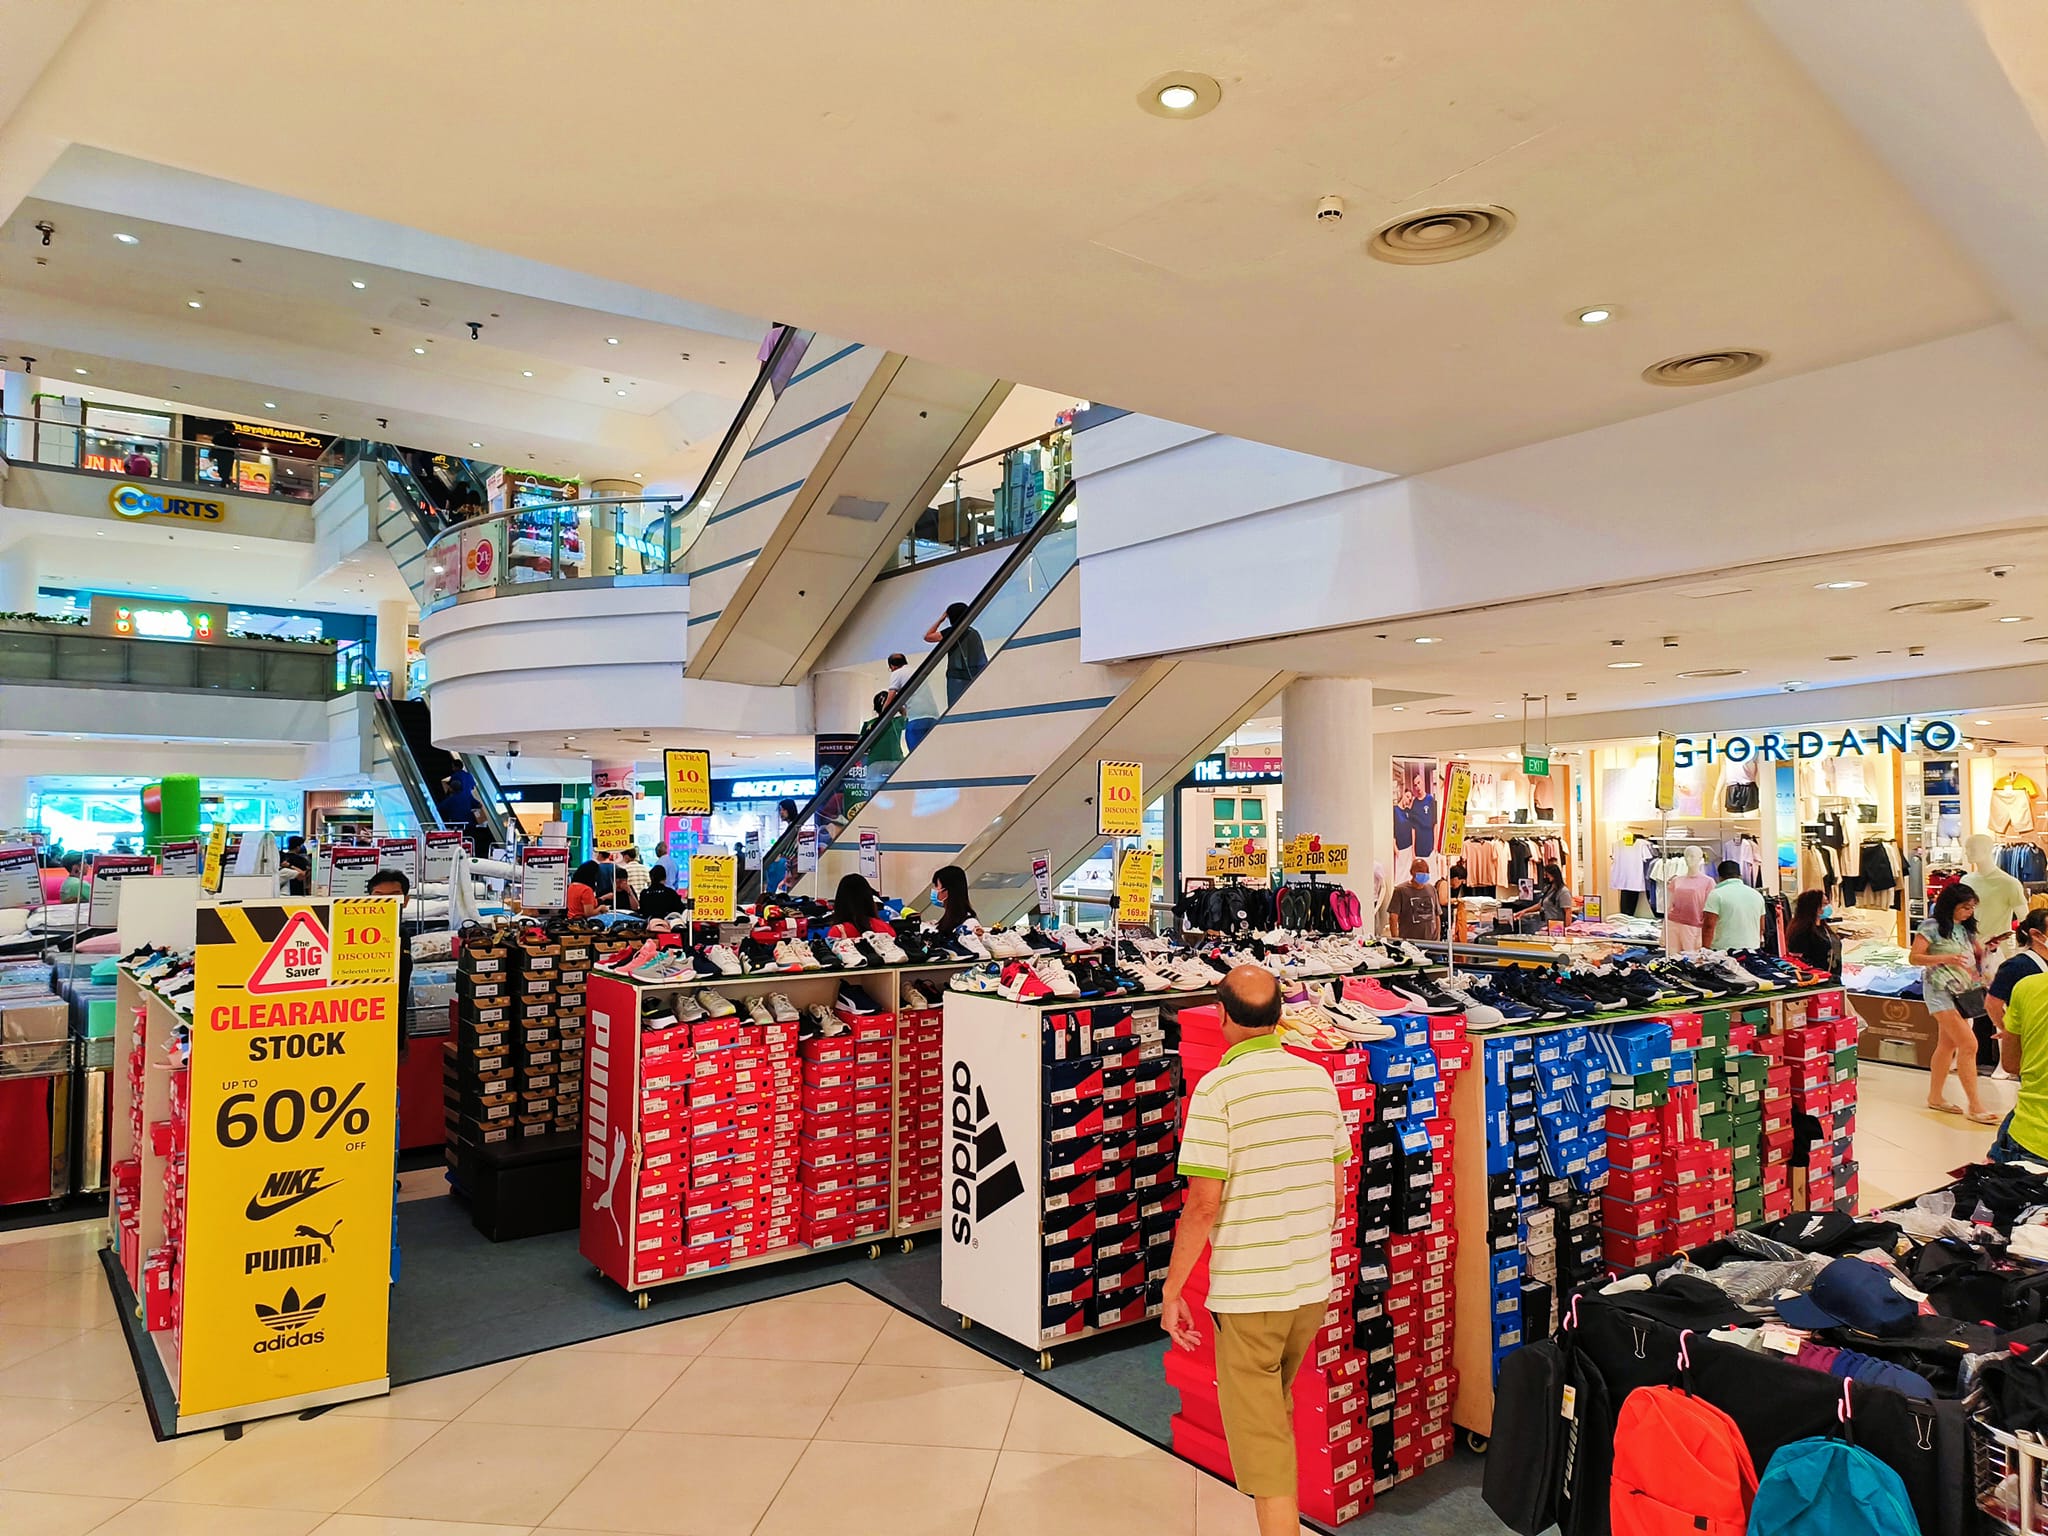 Lobang: Lot One's Atrium Sale Has Buy 1 Get 1 Free Sports Apparels From Adidas, Puma, Reebok & More Till 26 Mar 23 - 15